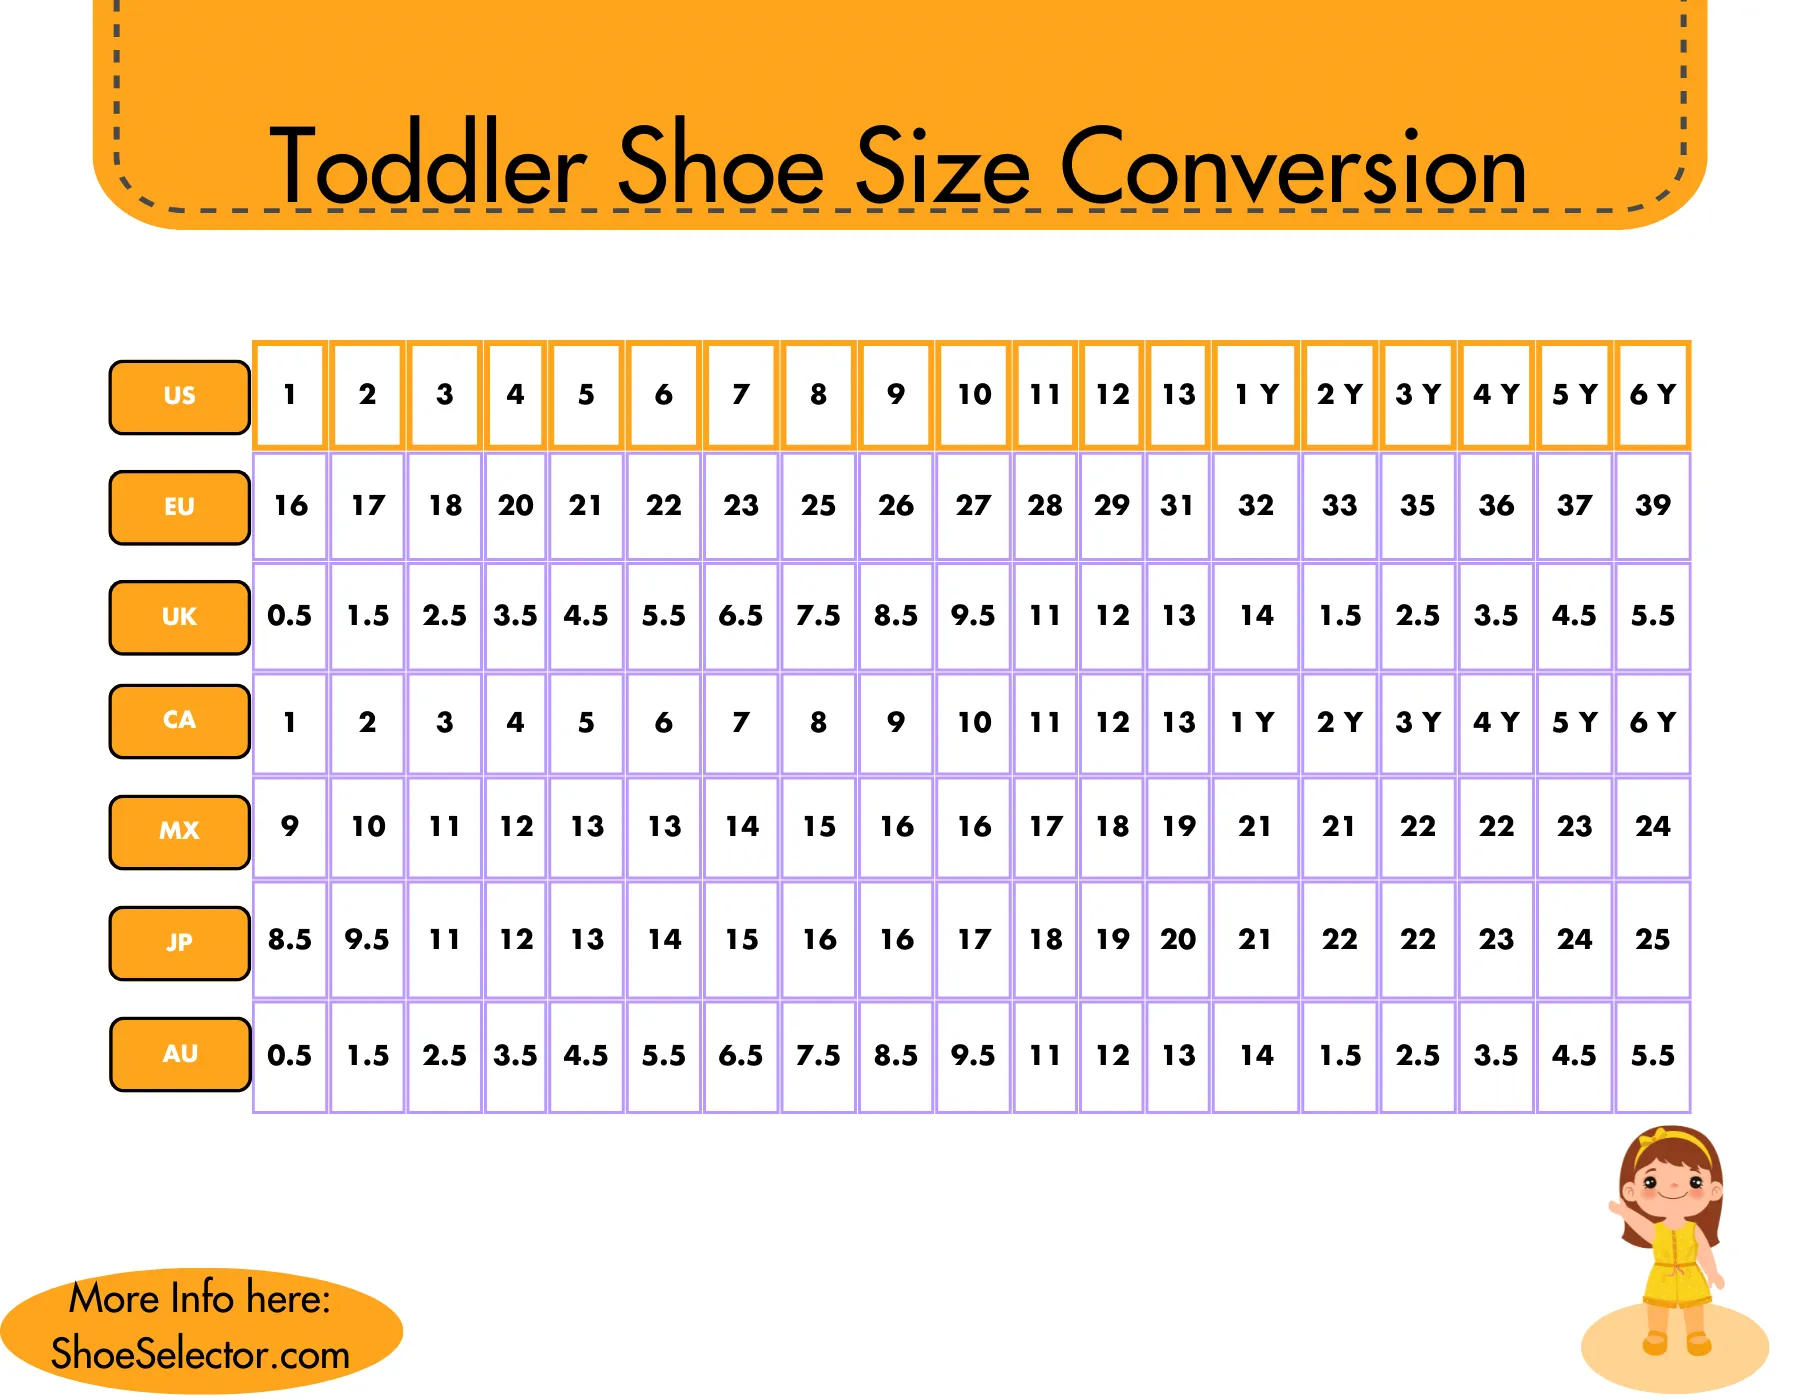 Toddler shoe size conversion